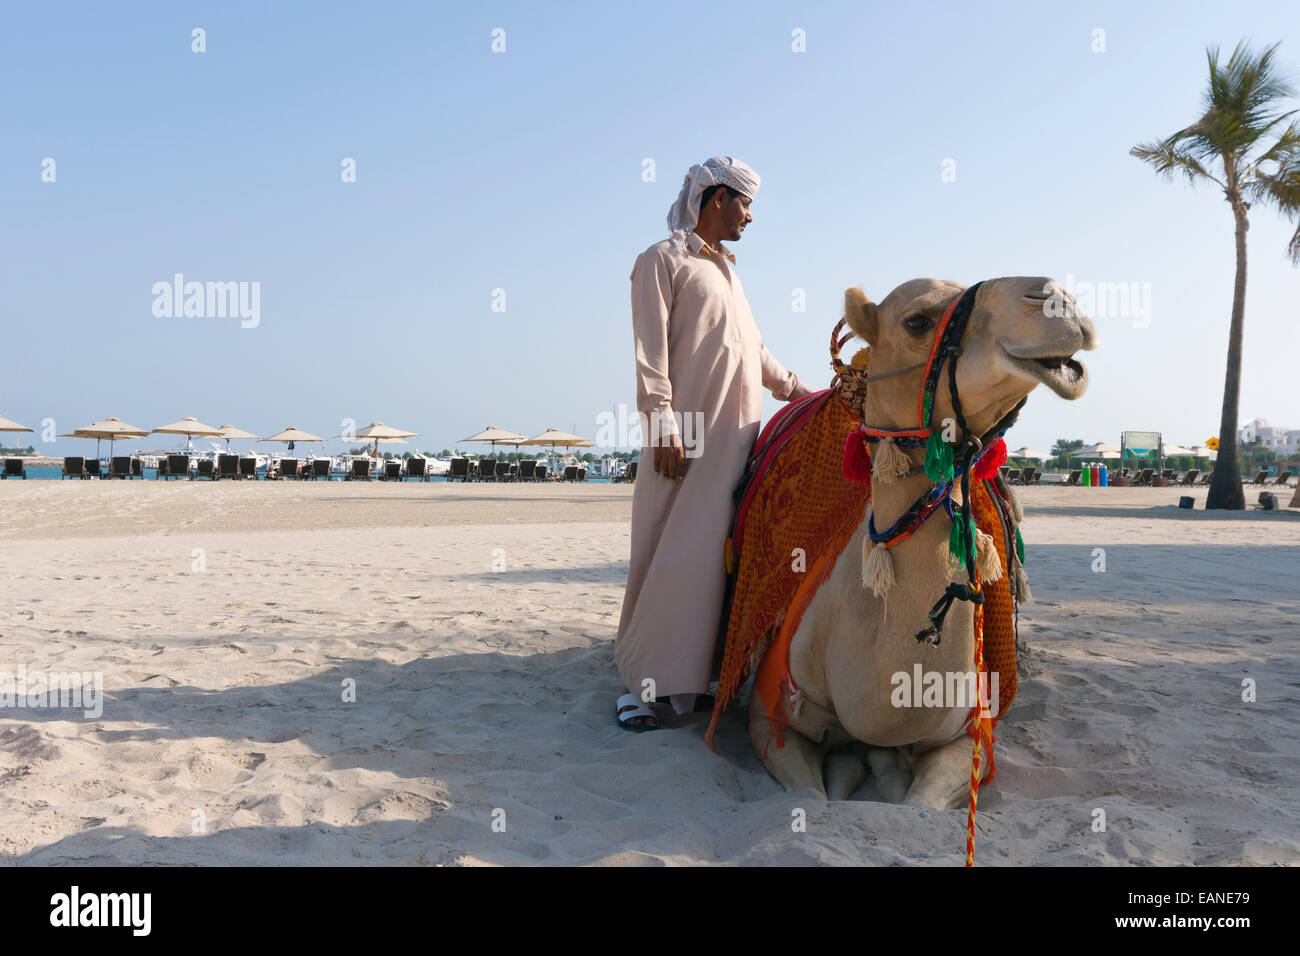 Abu Dhabi, negli Emirati Arabi Uniti. Cammelli sulla spiaggia. Foto Stock